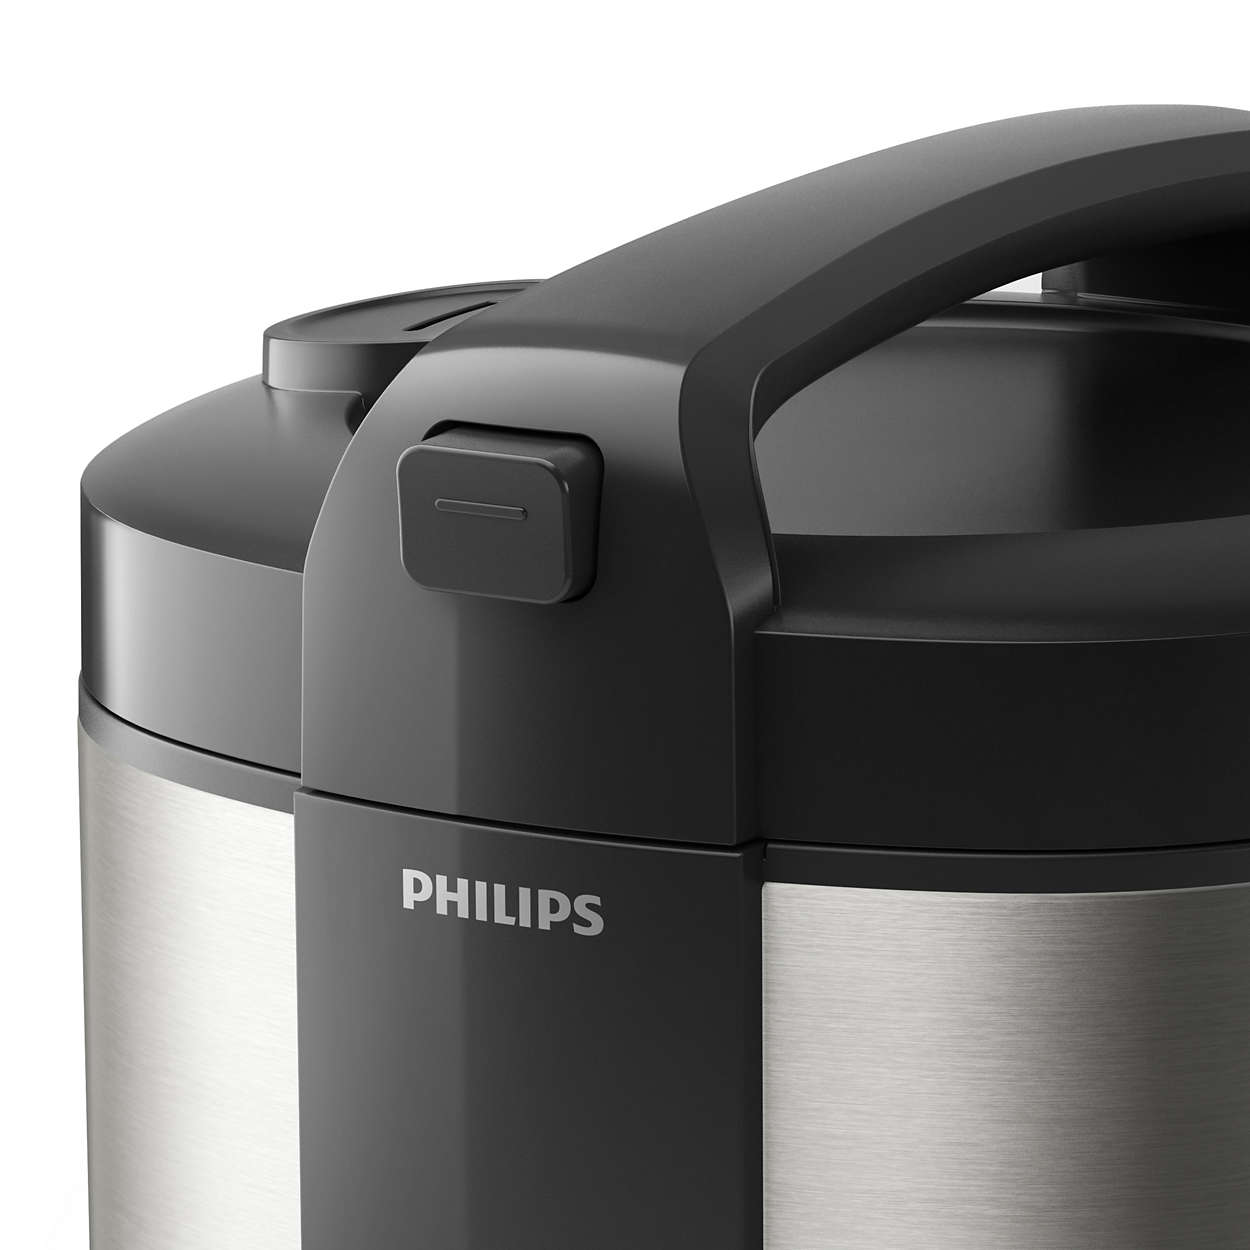 Philips jar rice cooker